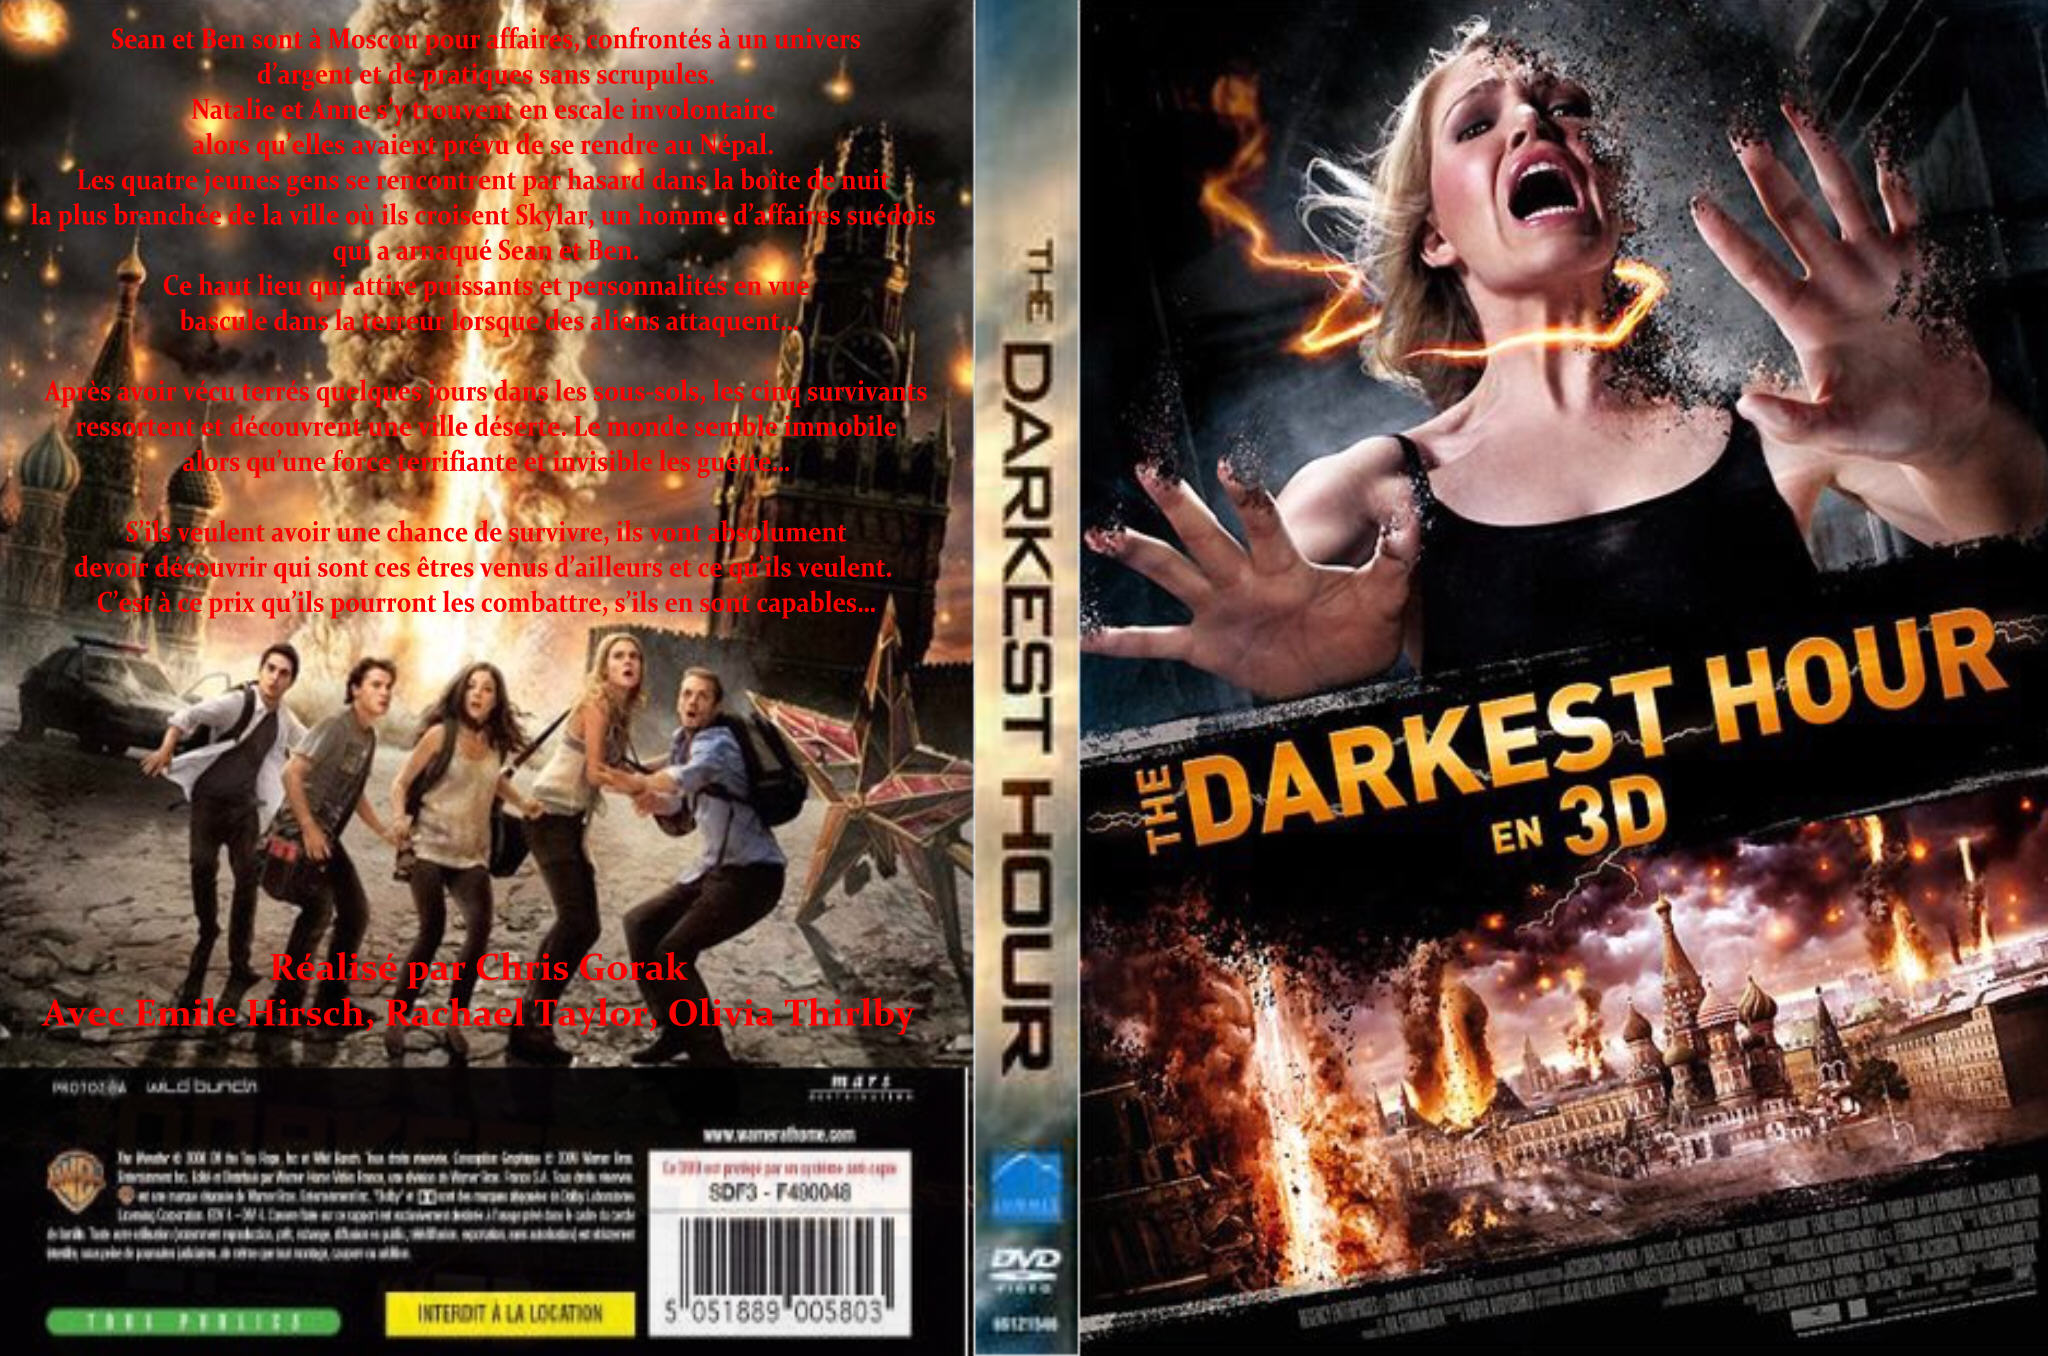 Jaquette DVD The darkest hour custom